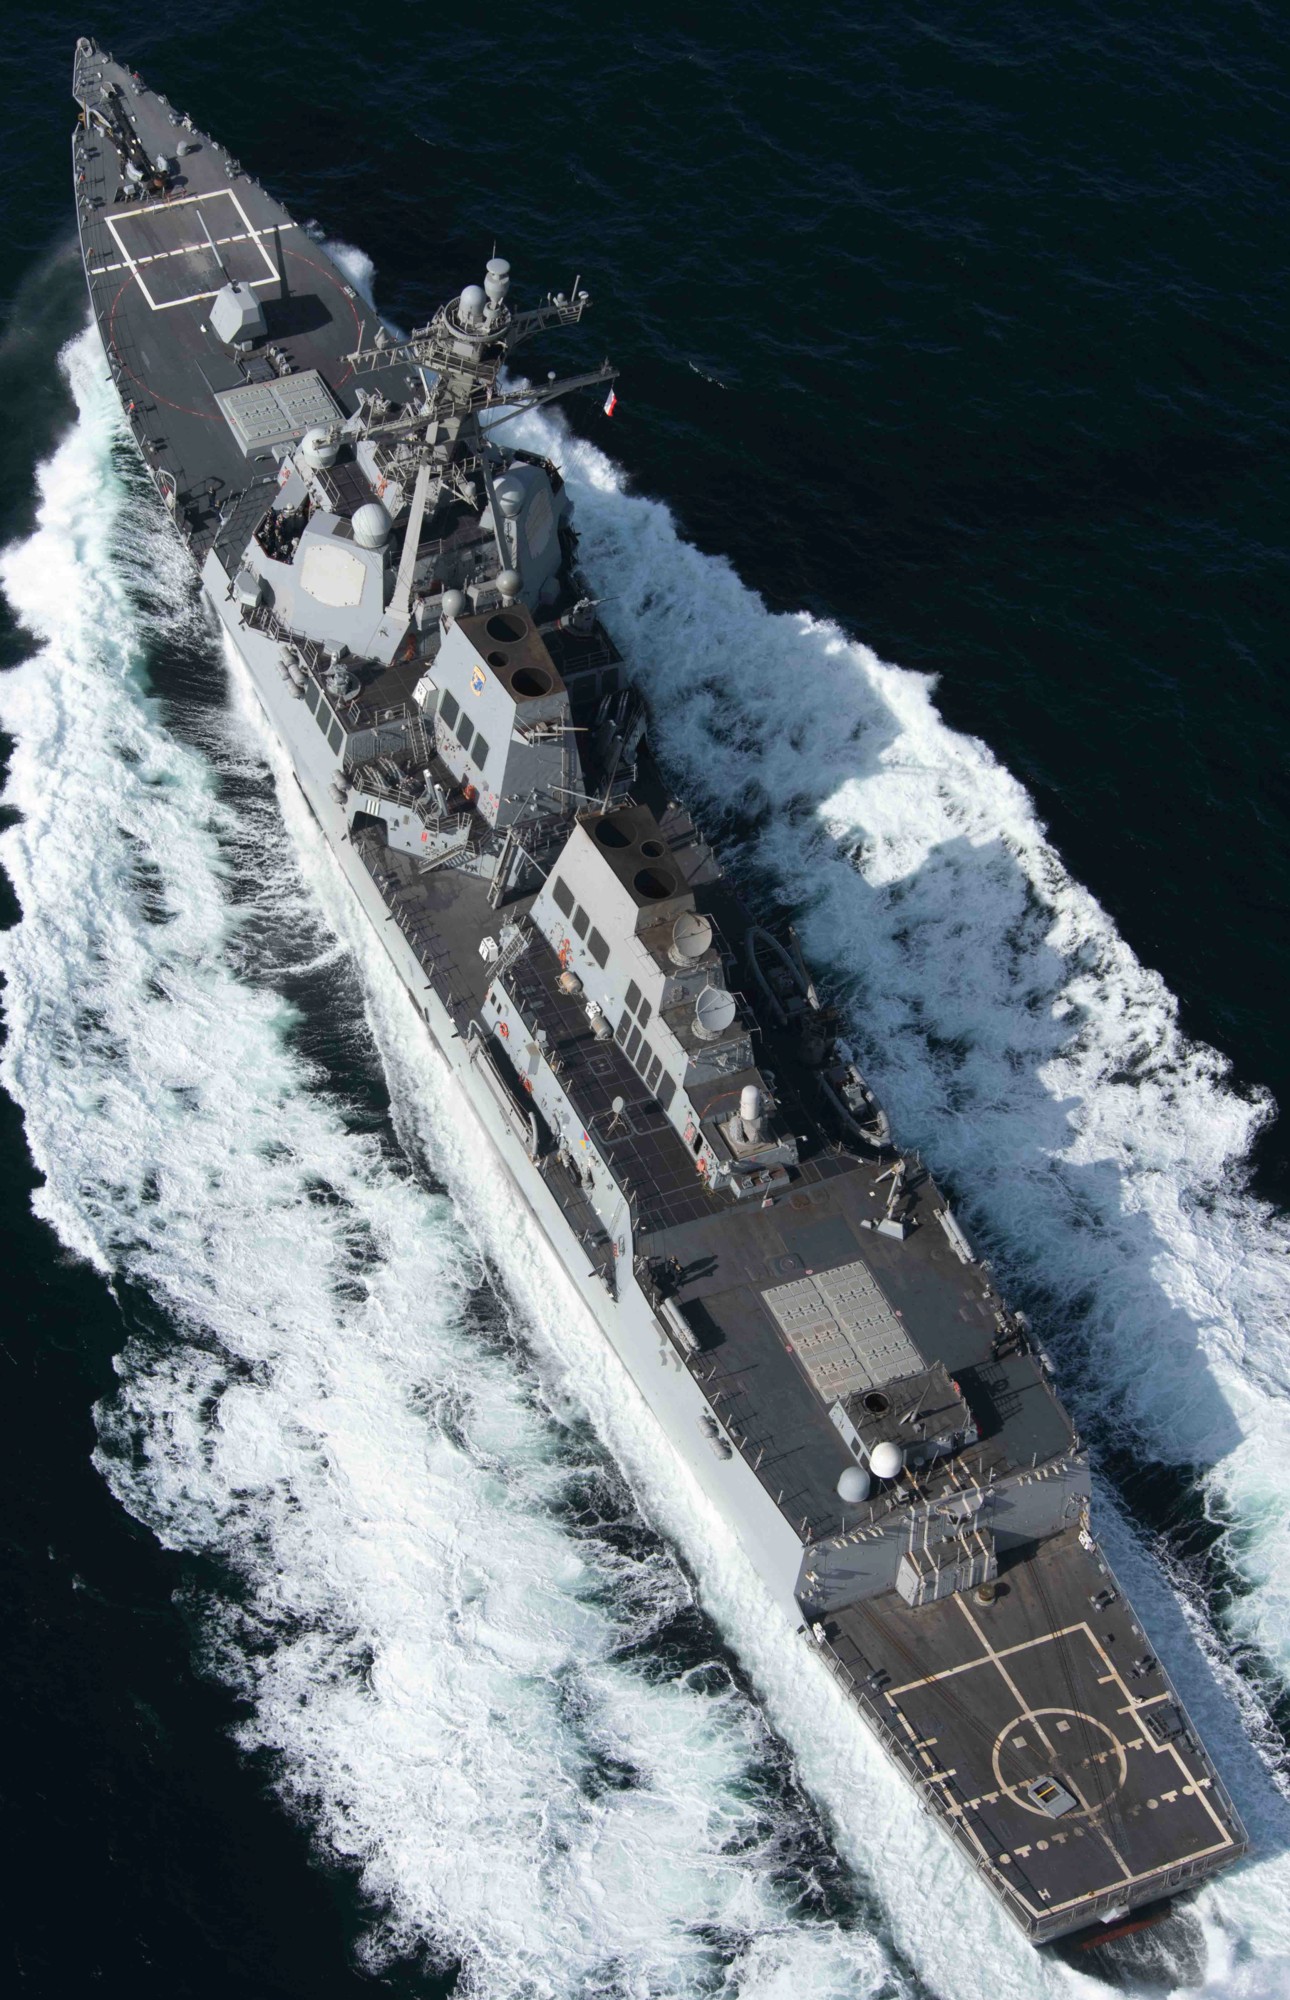 ddg-106 uss stockdale arleigh burke class guided missile destroyer aegis us navy strait of hormuz 117